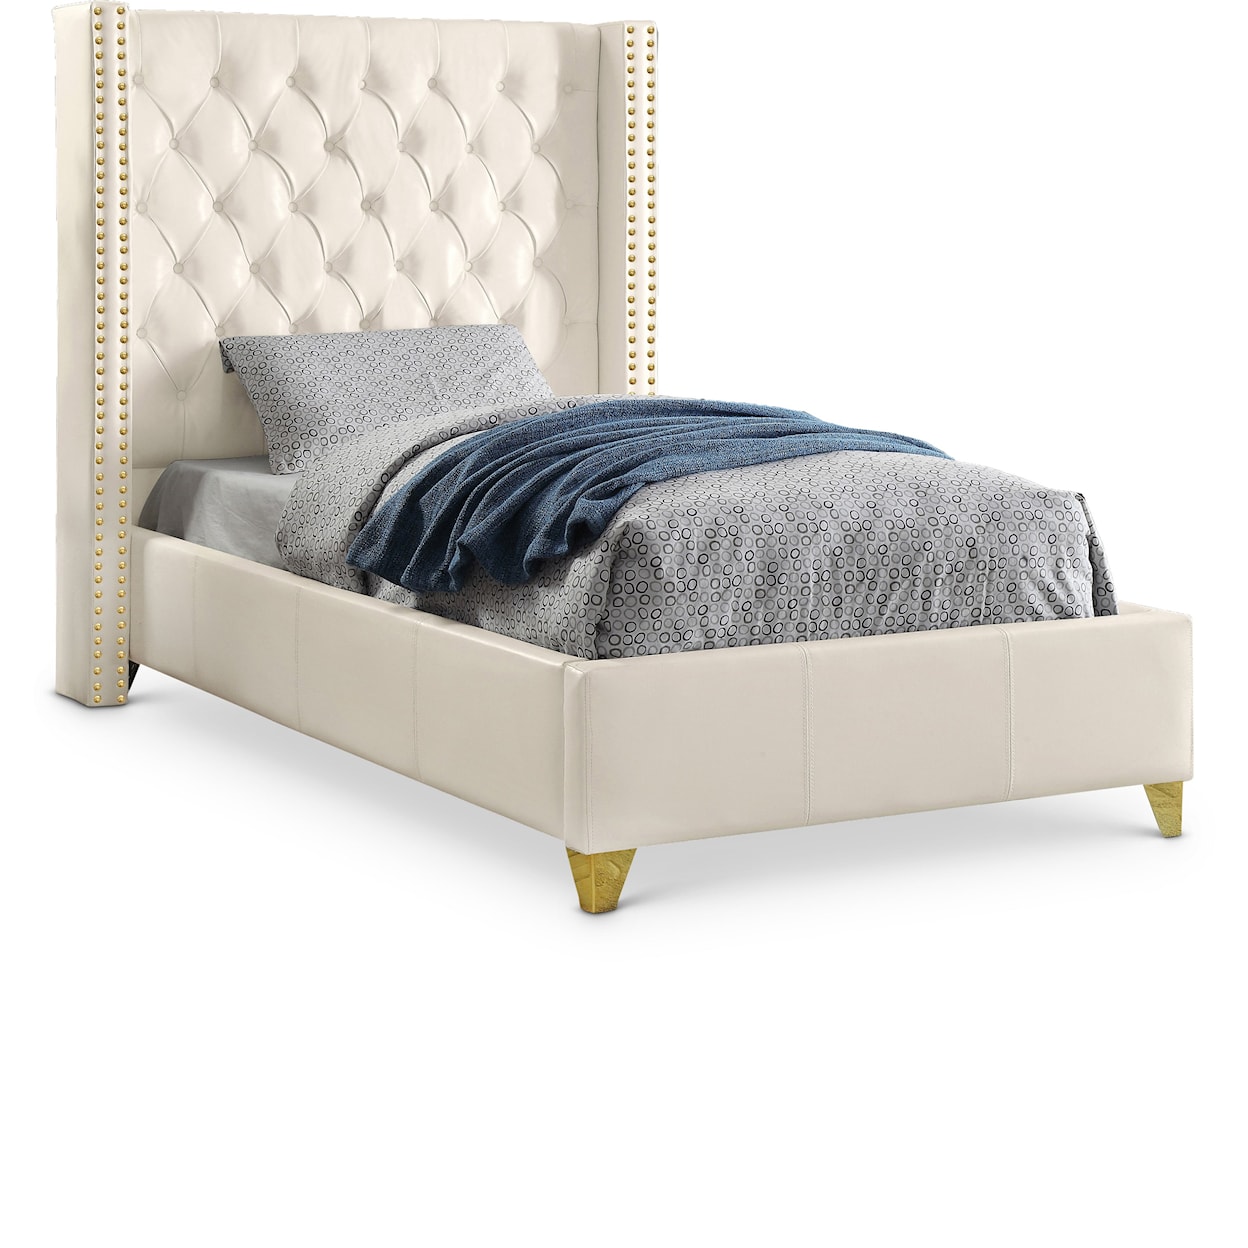 Meridian Furniture Soho Twin Bed